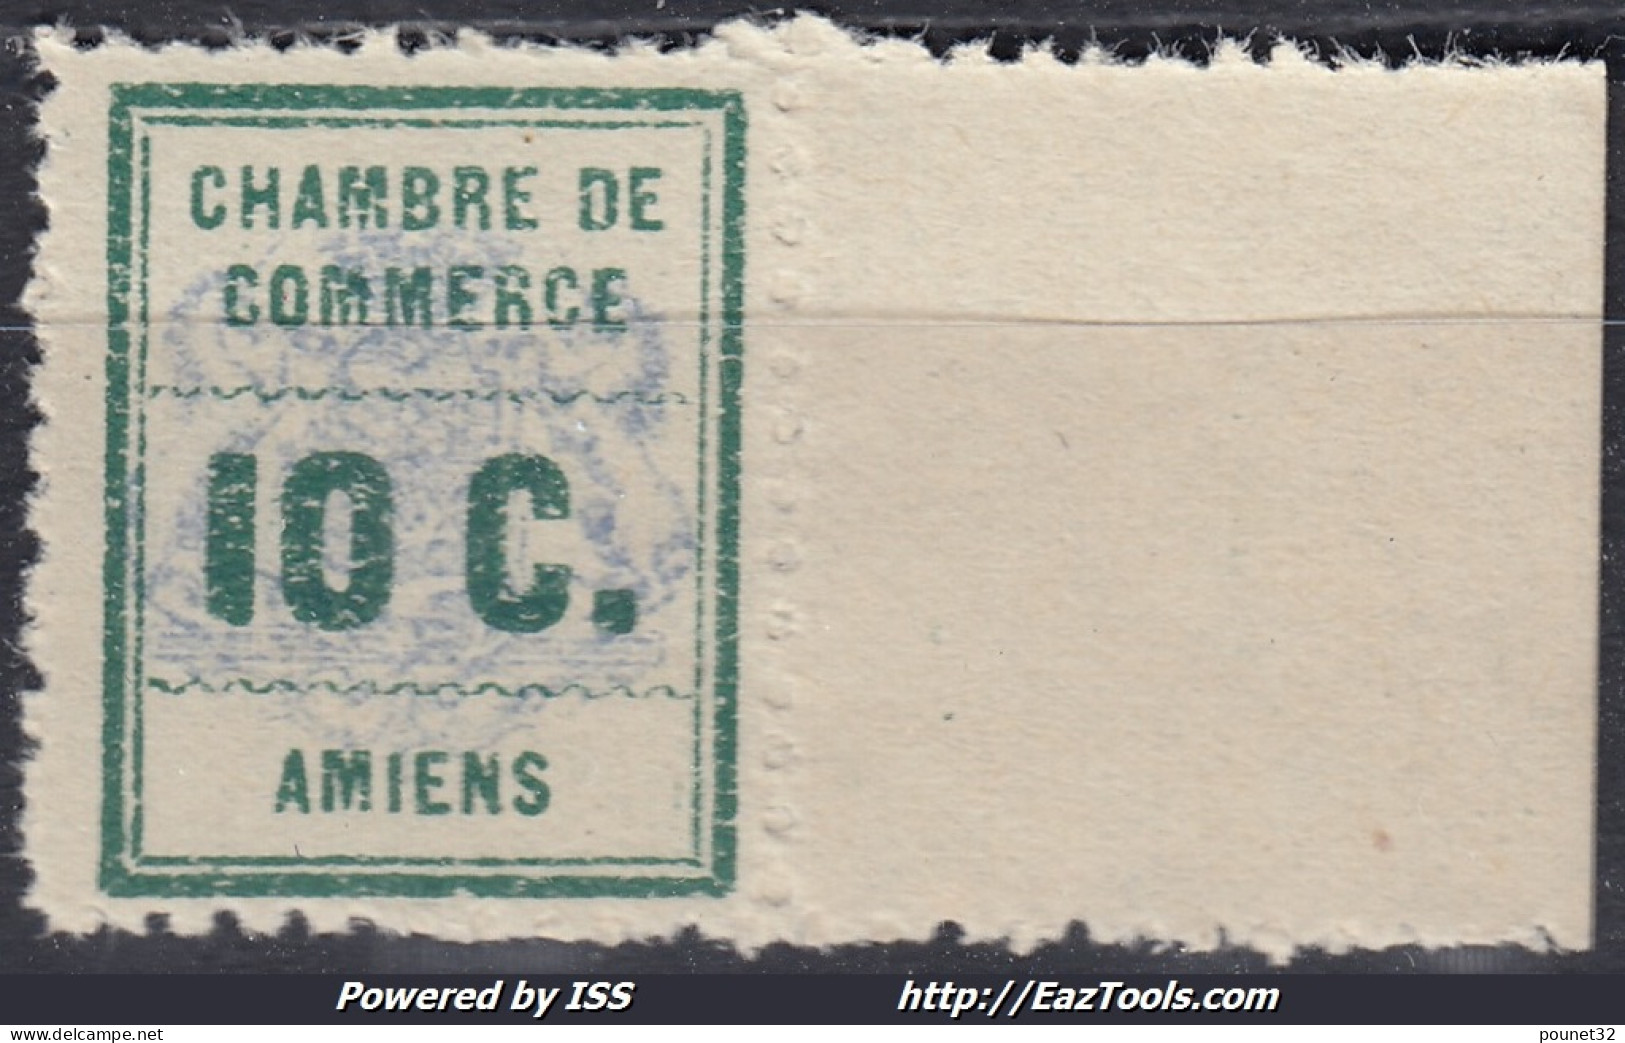 FRANCE : GREVE CHAMBRE DE COMMERCE D' AMIENS N° 1 NEUF ** GOMME SANS CHARNIERE - Stamps